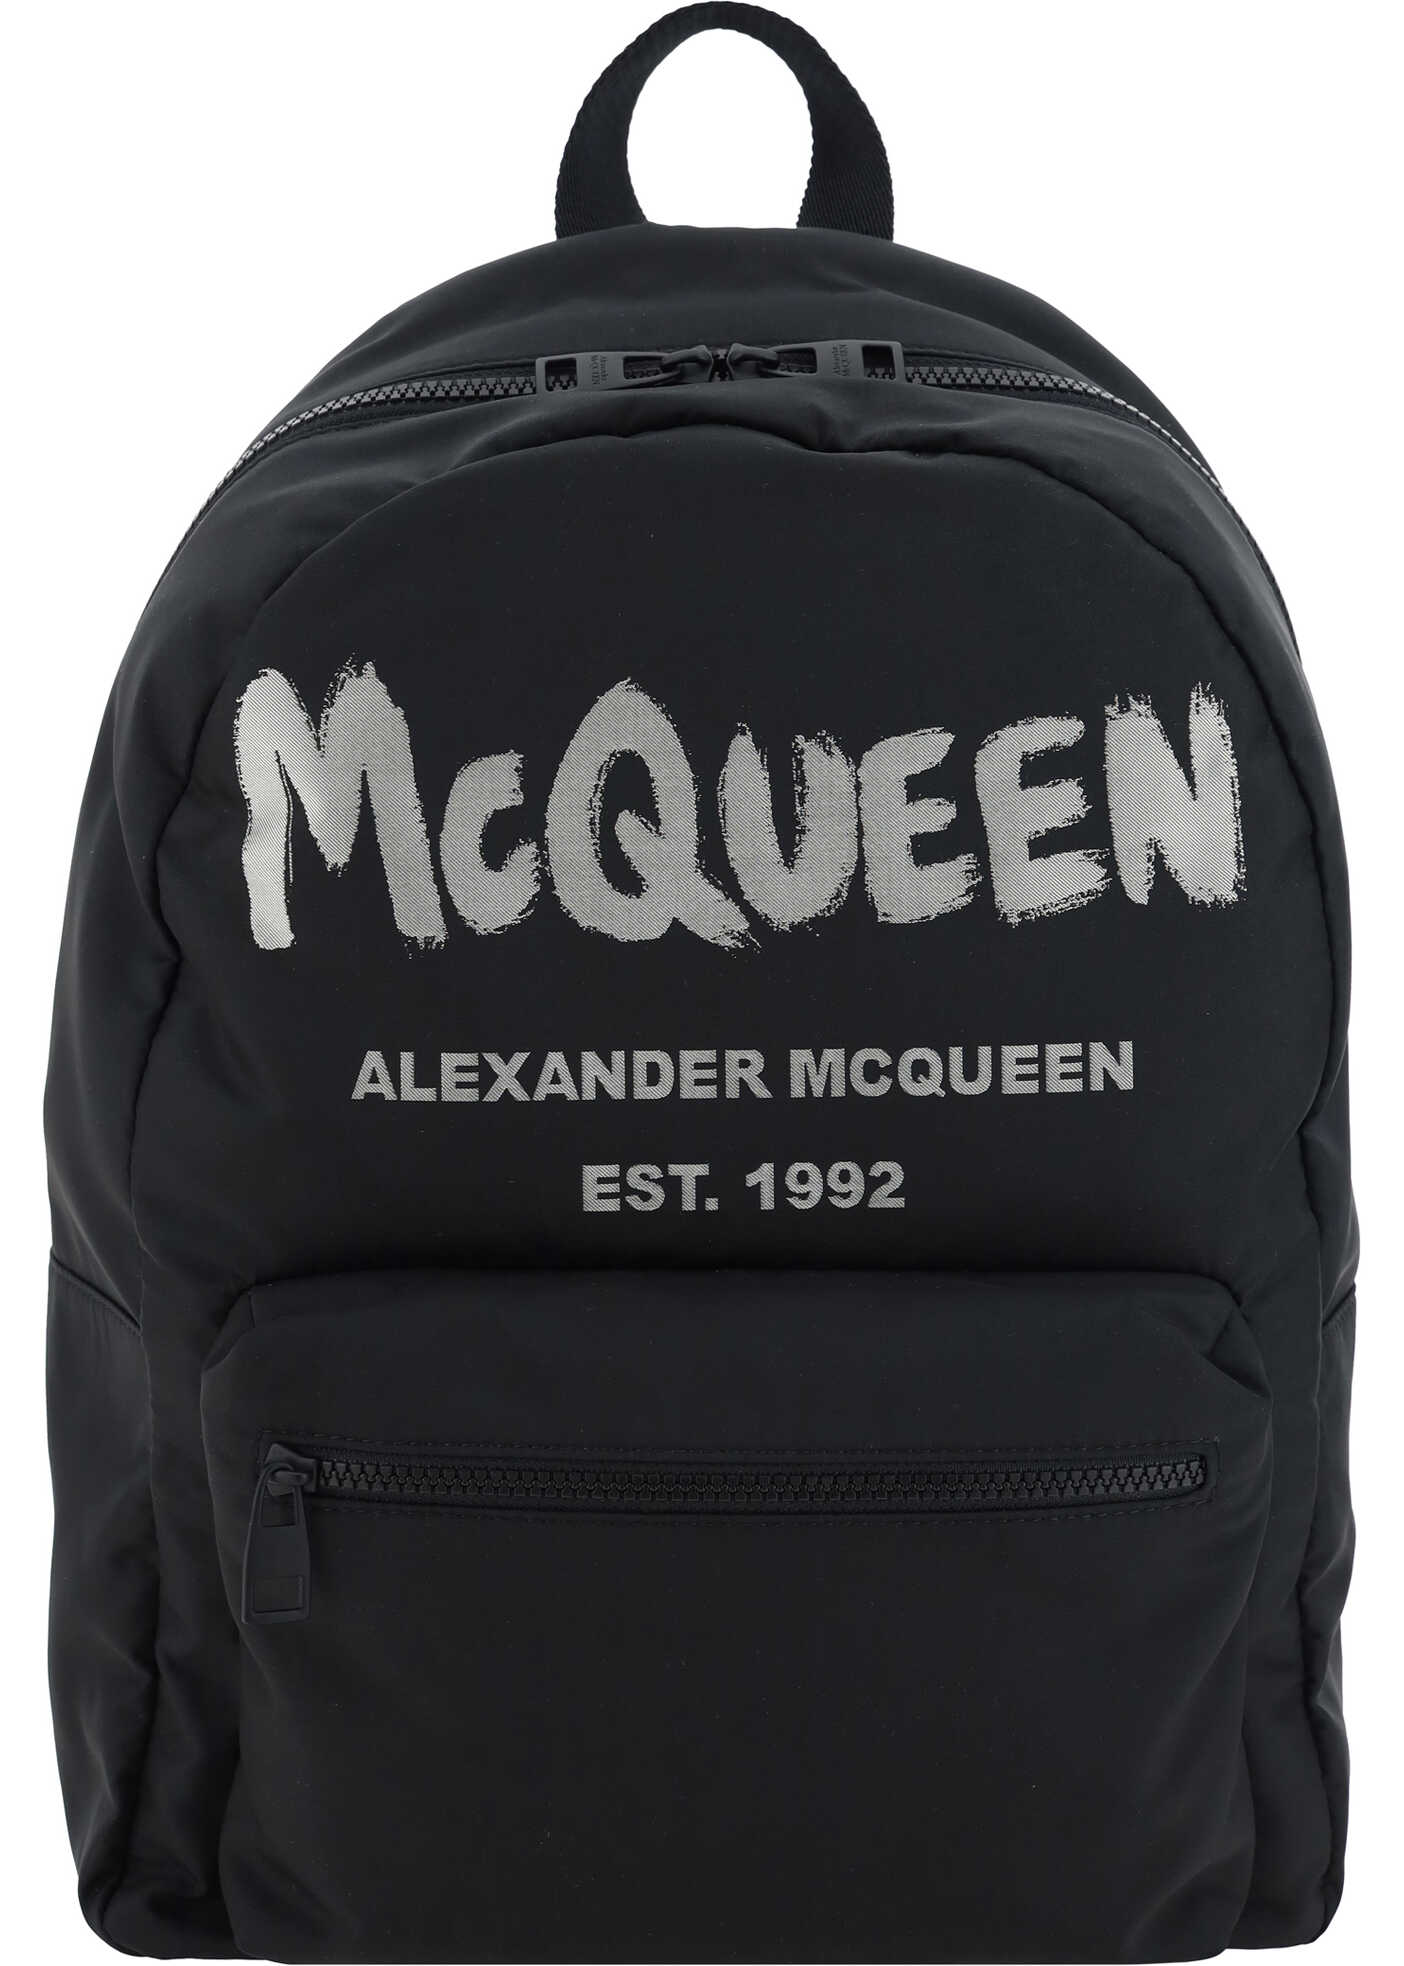 Alexander McQueen Backpack BLACK/OFF WHITE